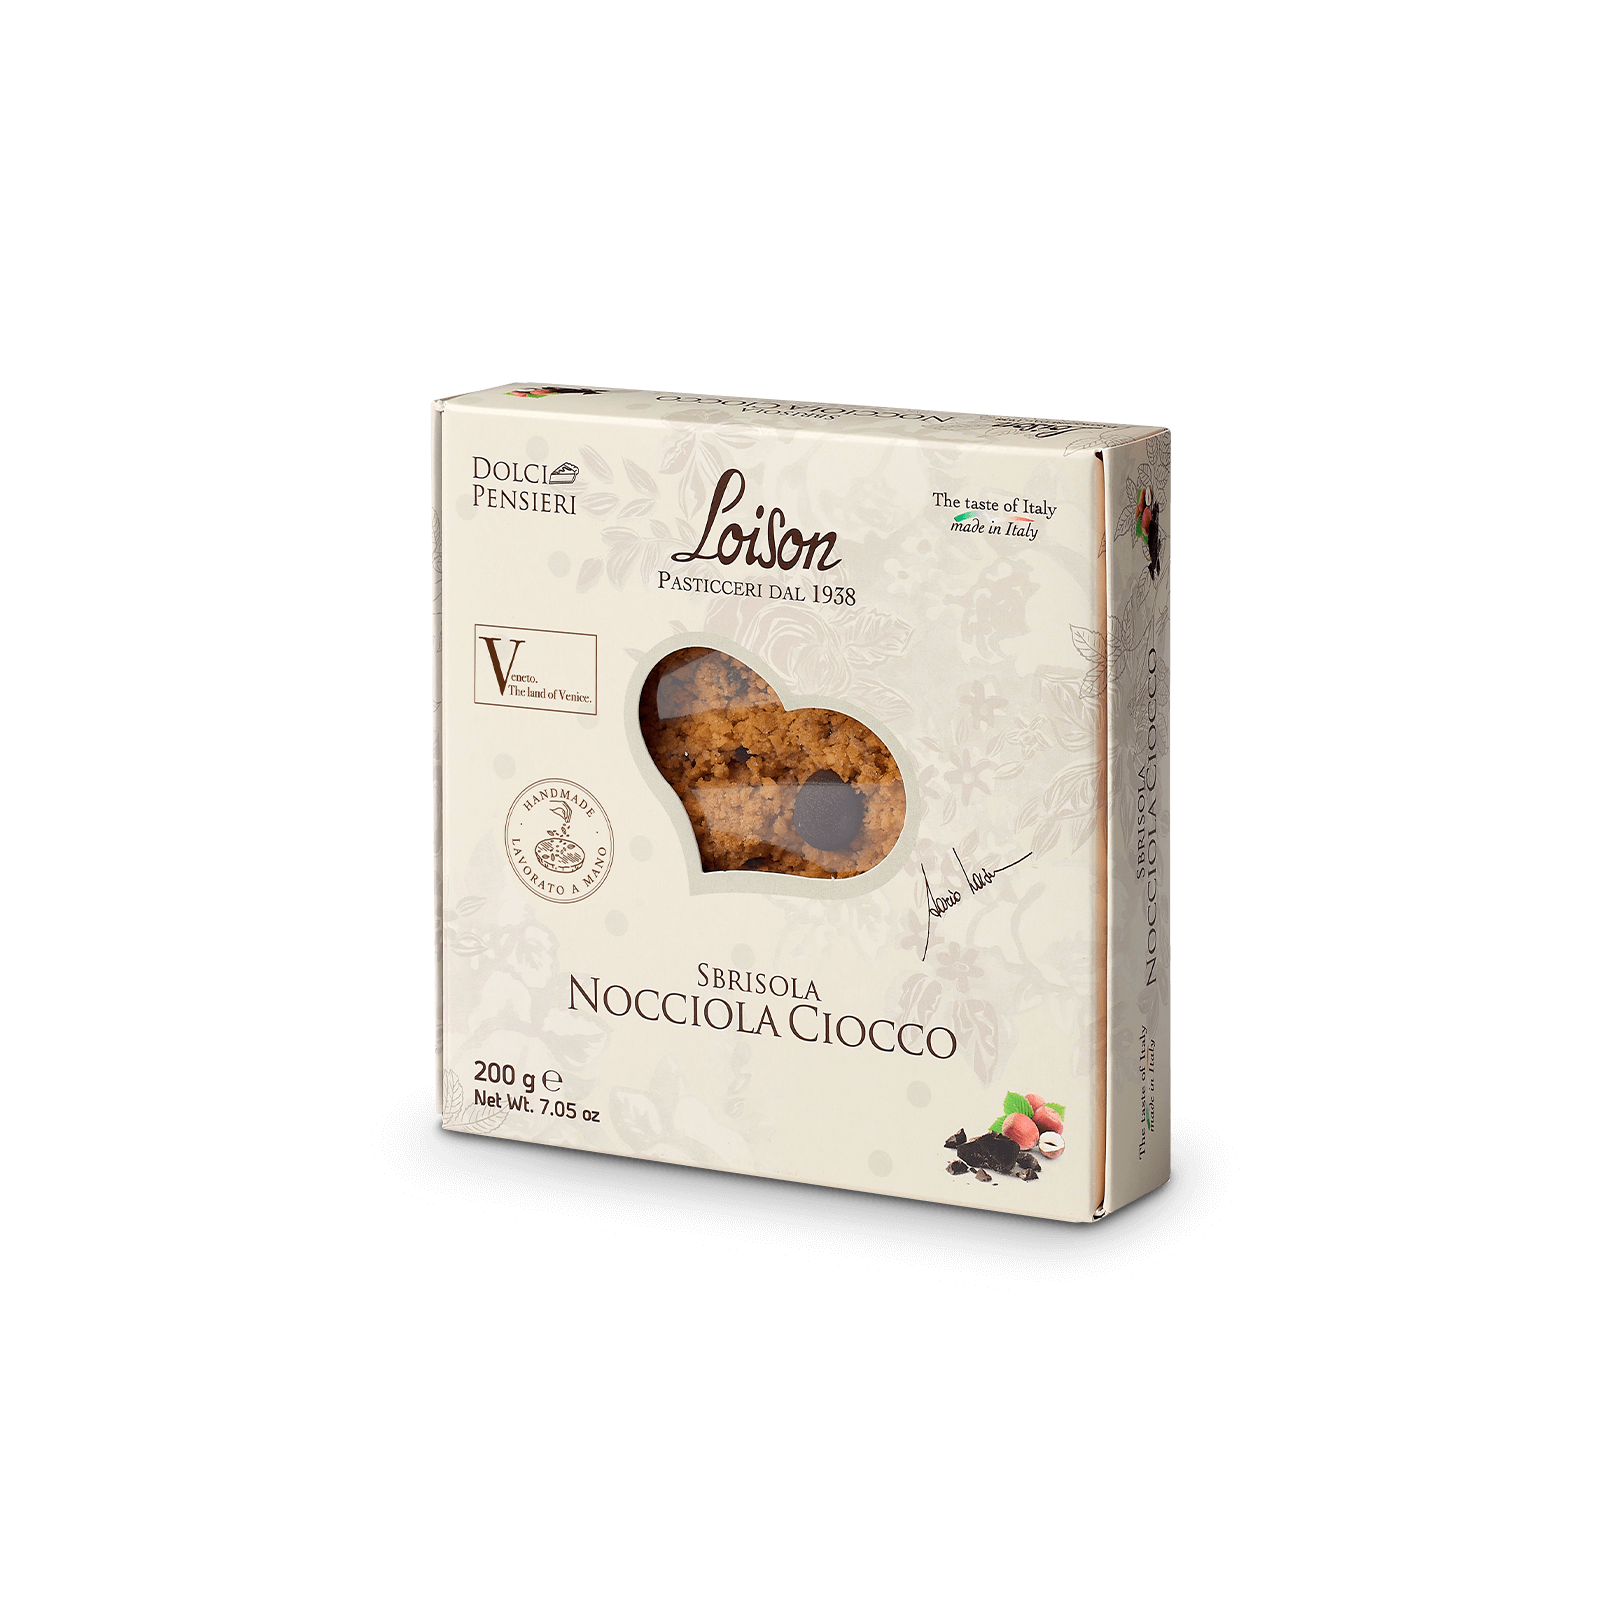 Sbrisola with chocolate and Piemonte hazelnuts - Loison